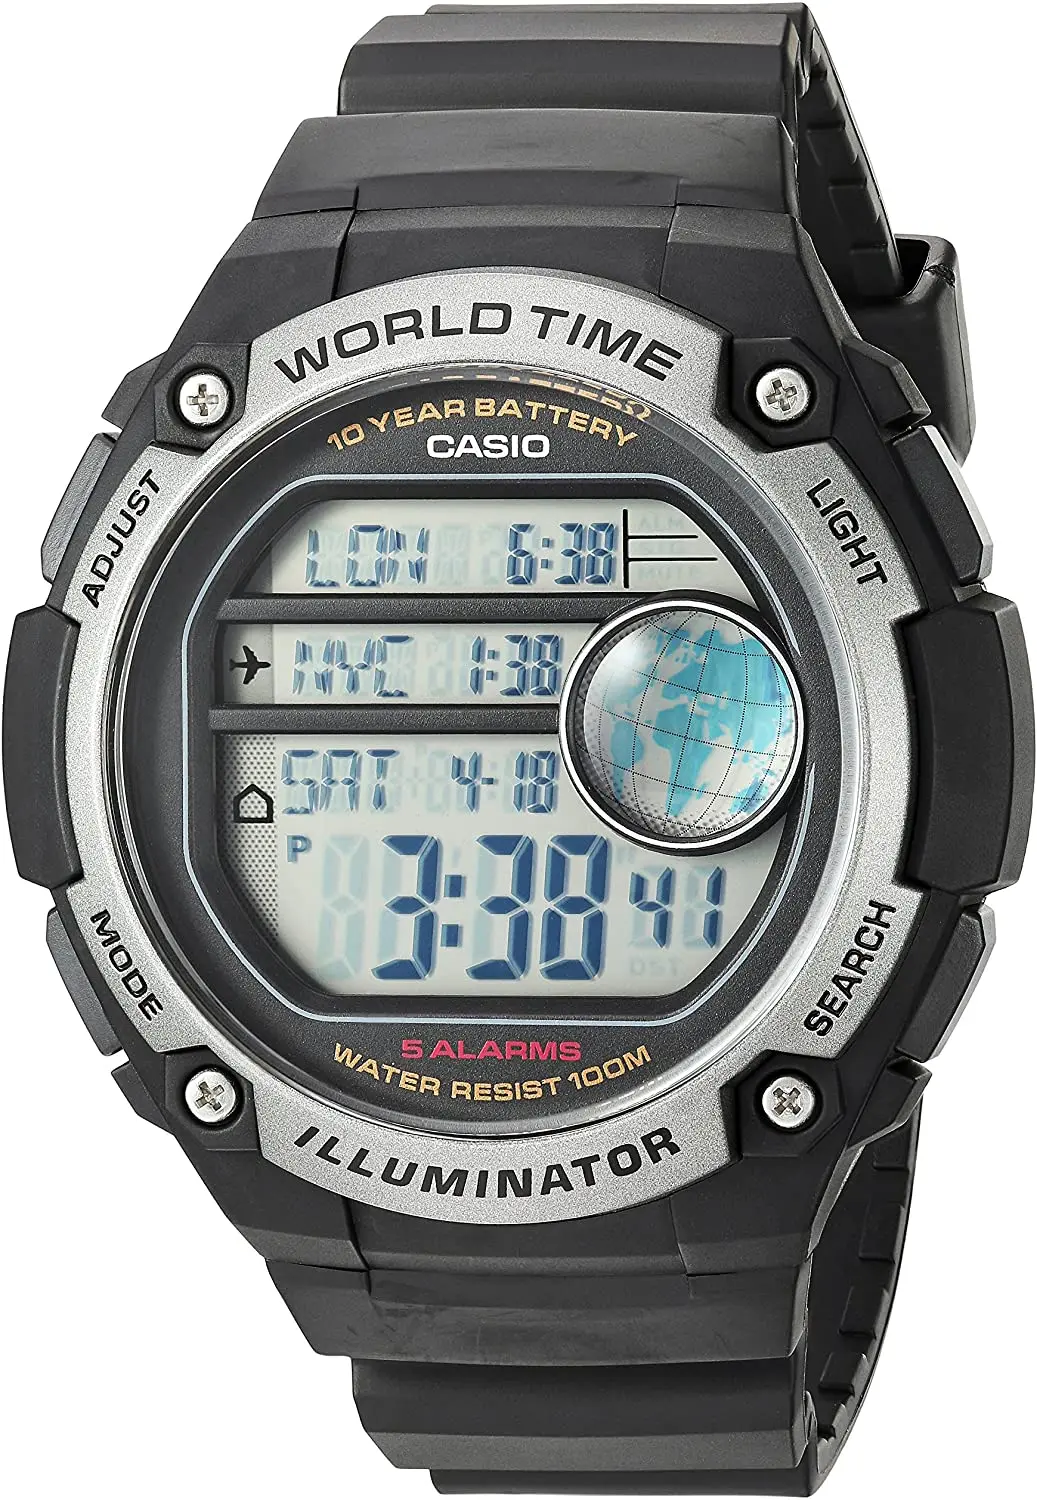 Casio watch AE 3000W 1AV digital world time water resistant 100m|Digital  Watches| - AliExpress